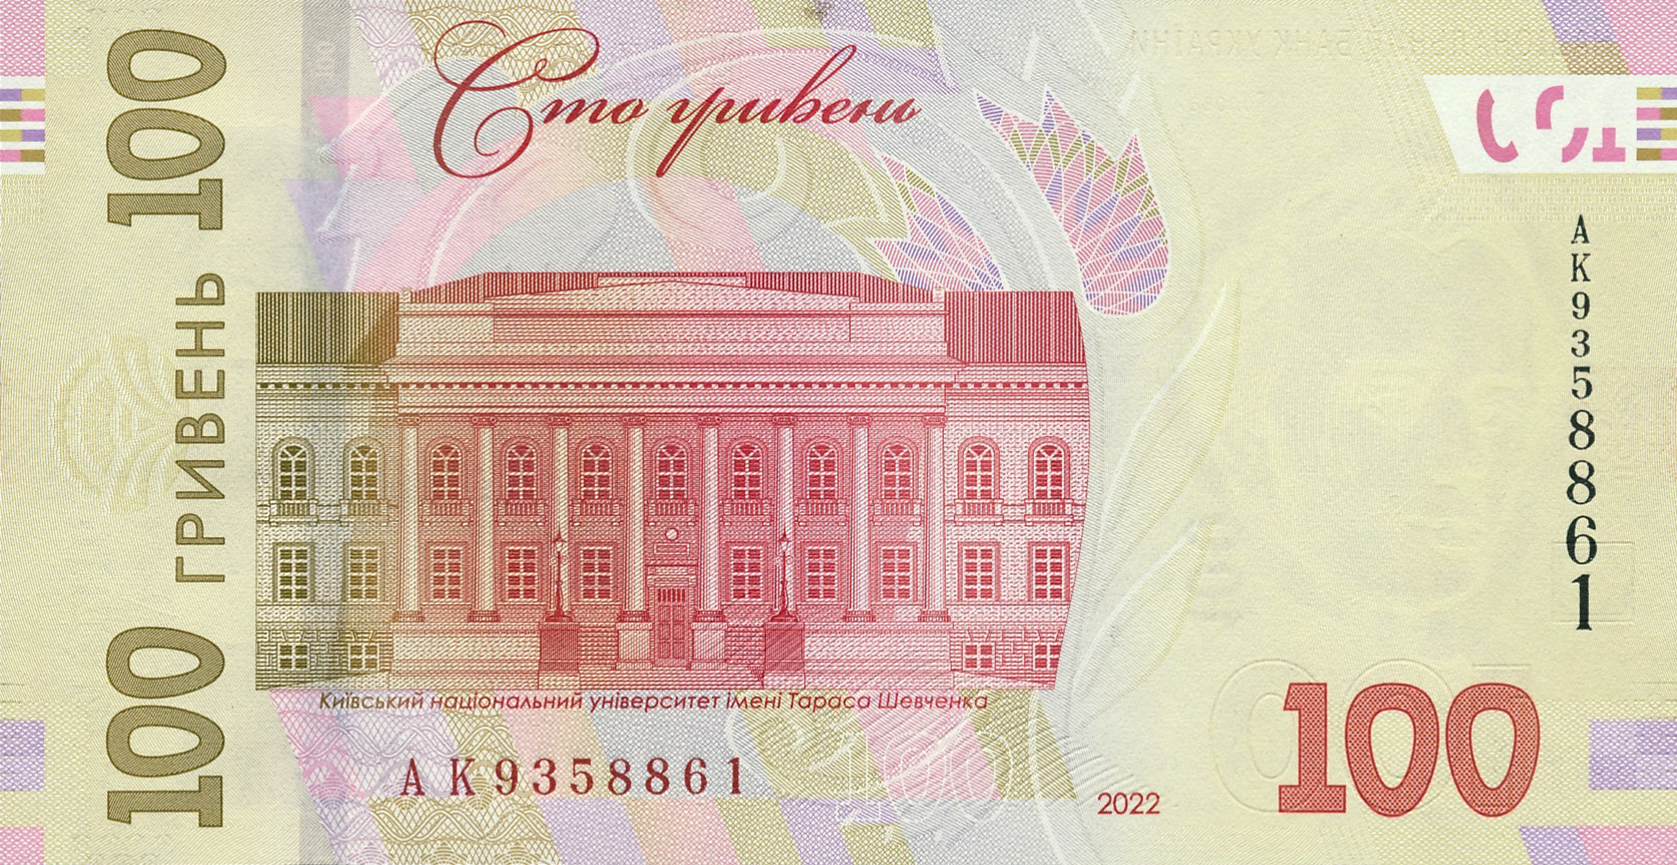 Ukraine new sig/date (2022) 100-hryvnia note (B856d) confirmed ...